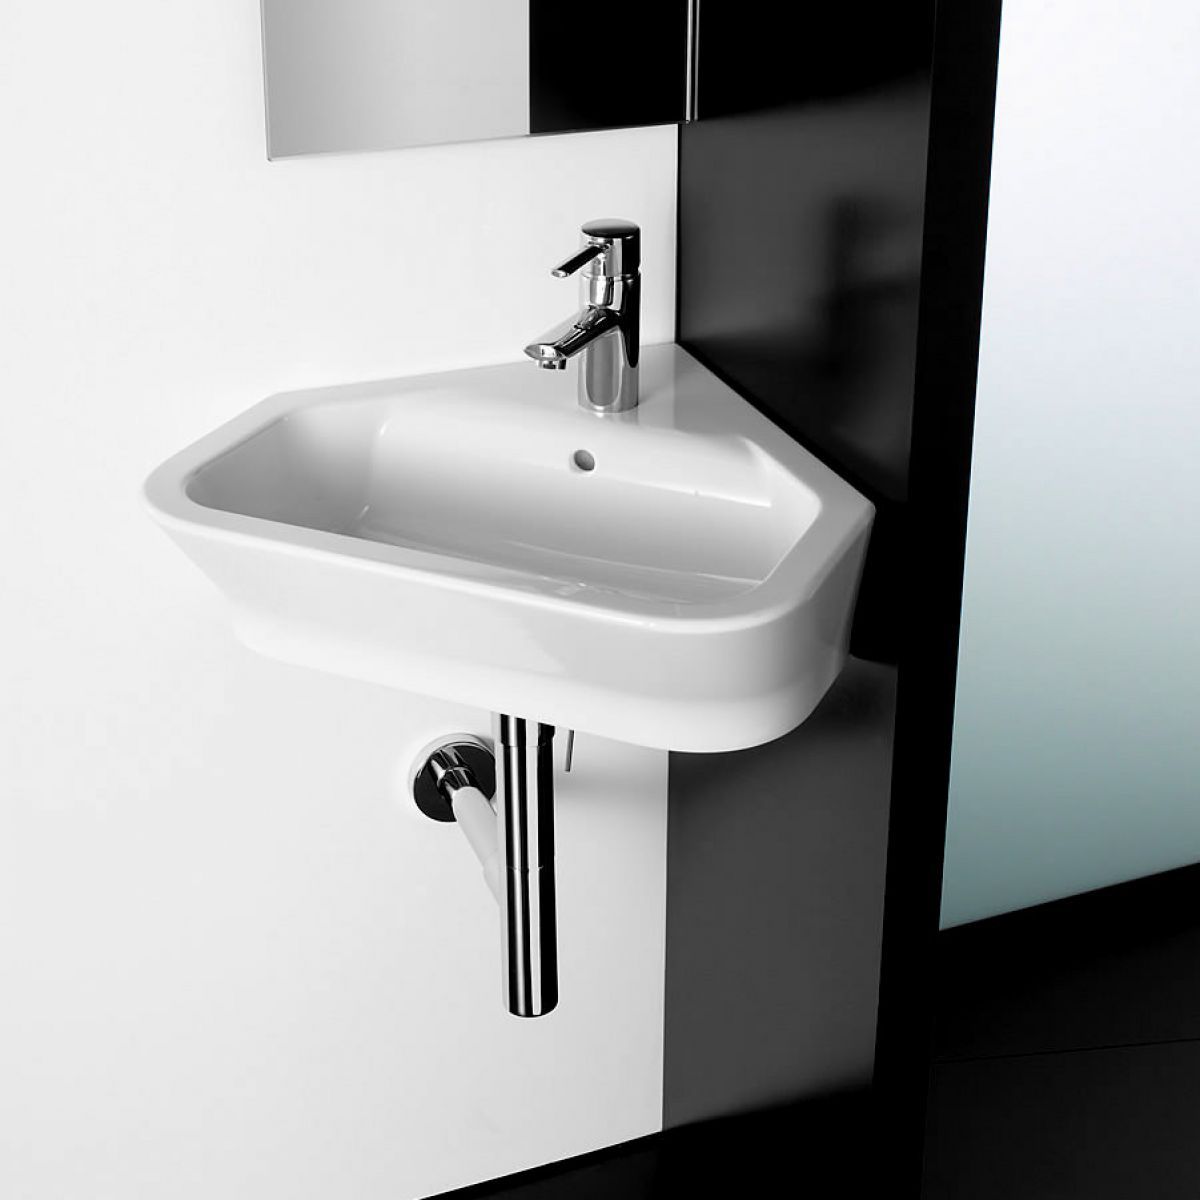 image example of a corner bathroom basin